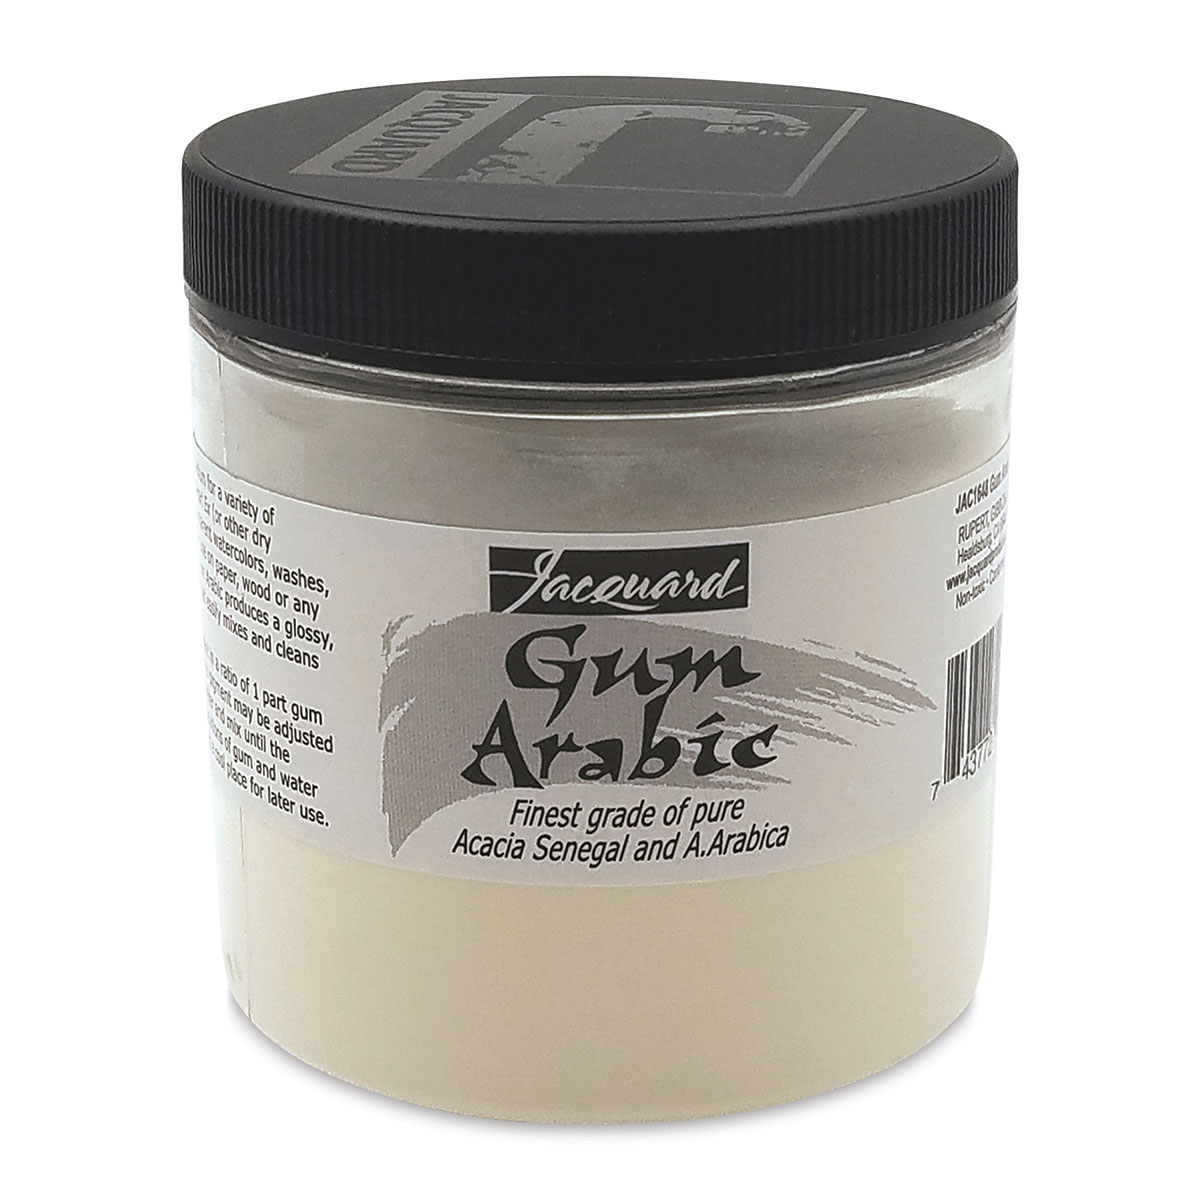 Jacquard Gum Arabic - 4 oz, Jar